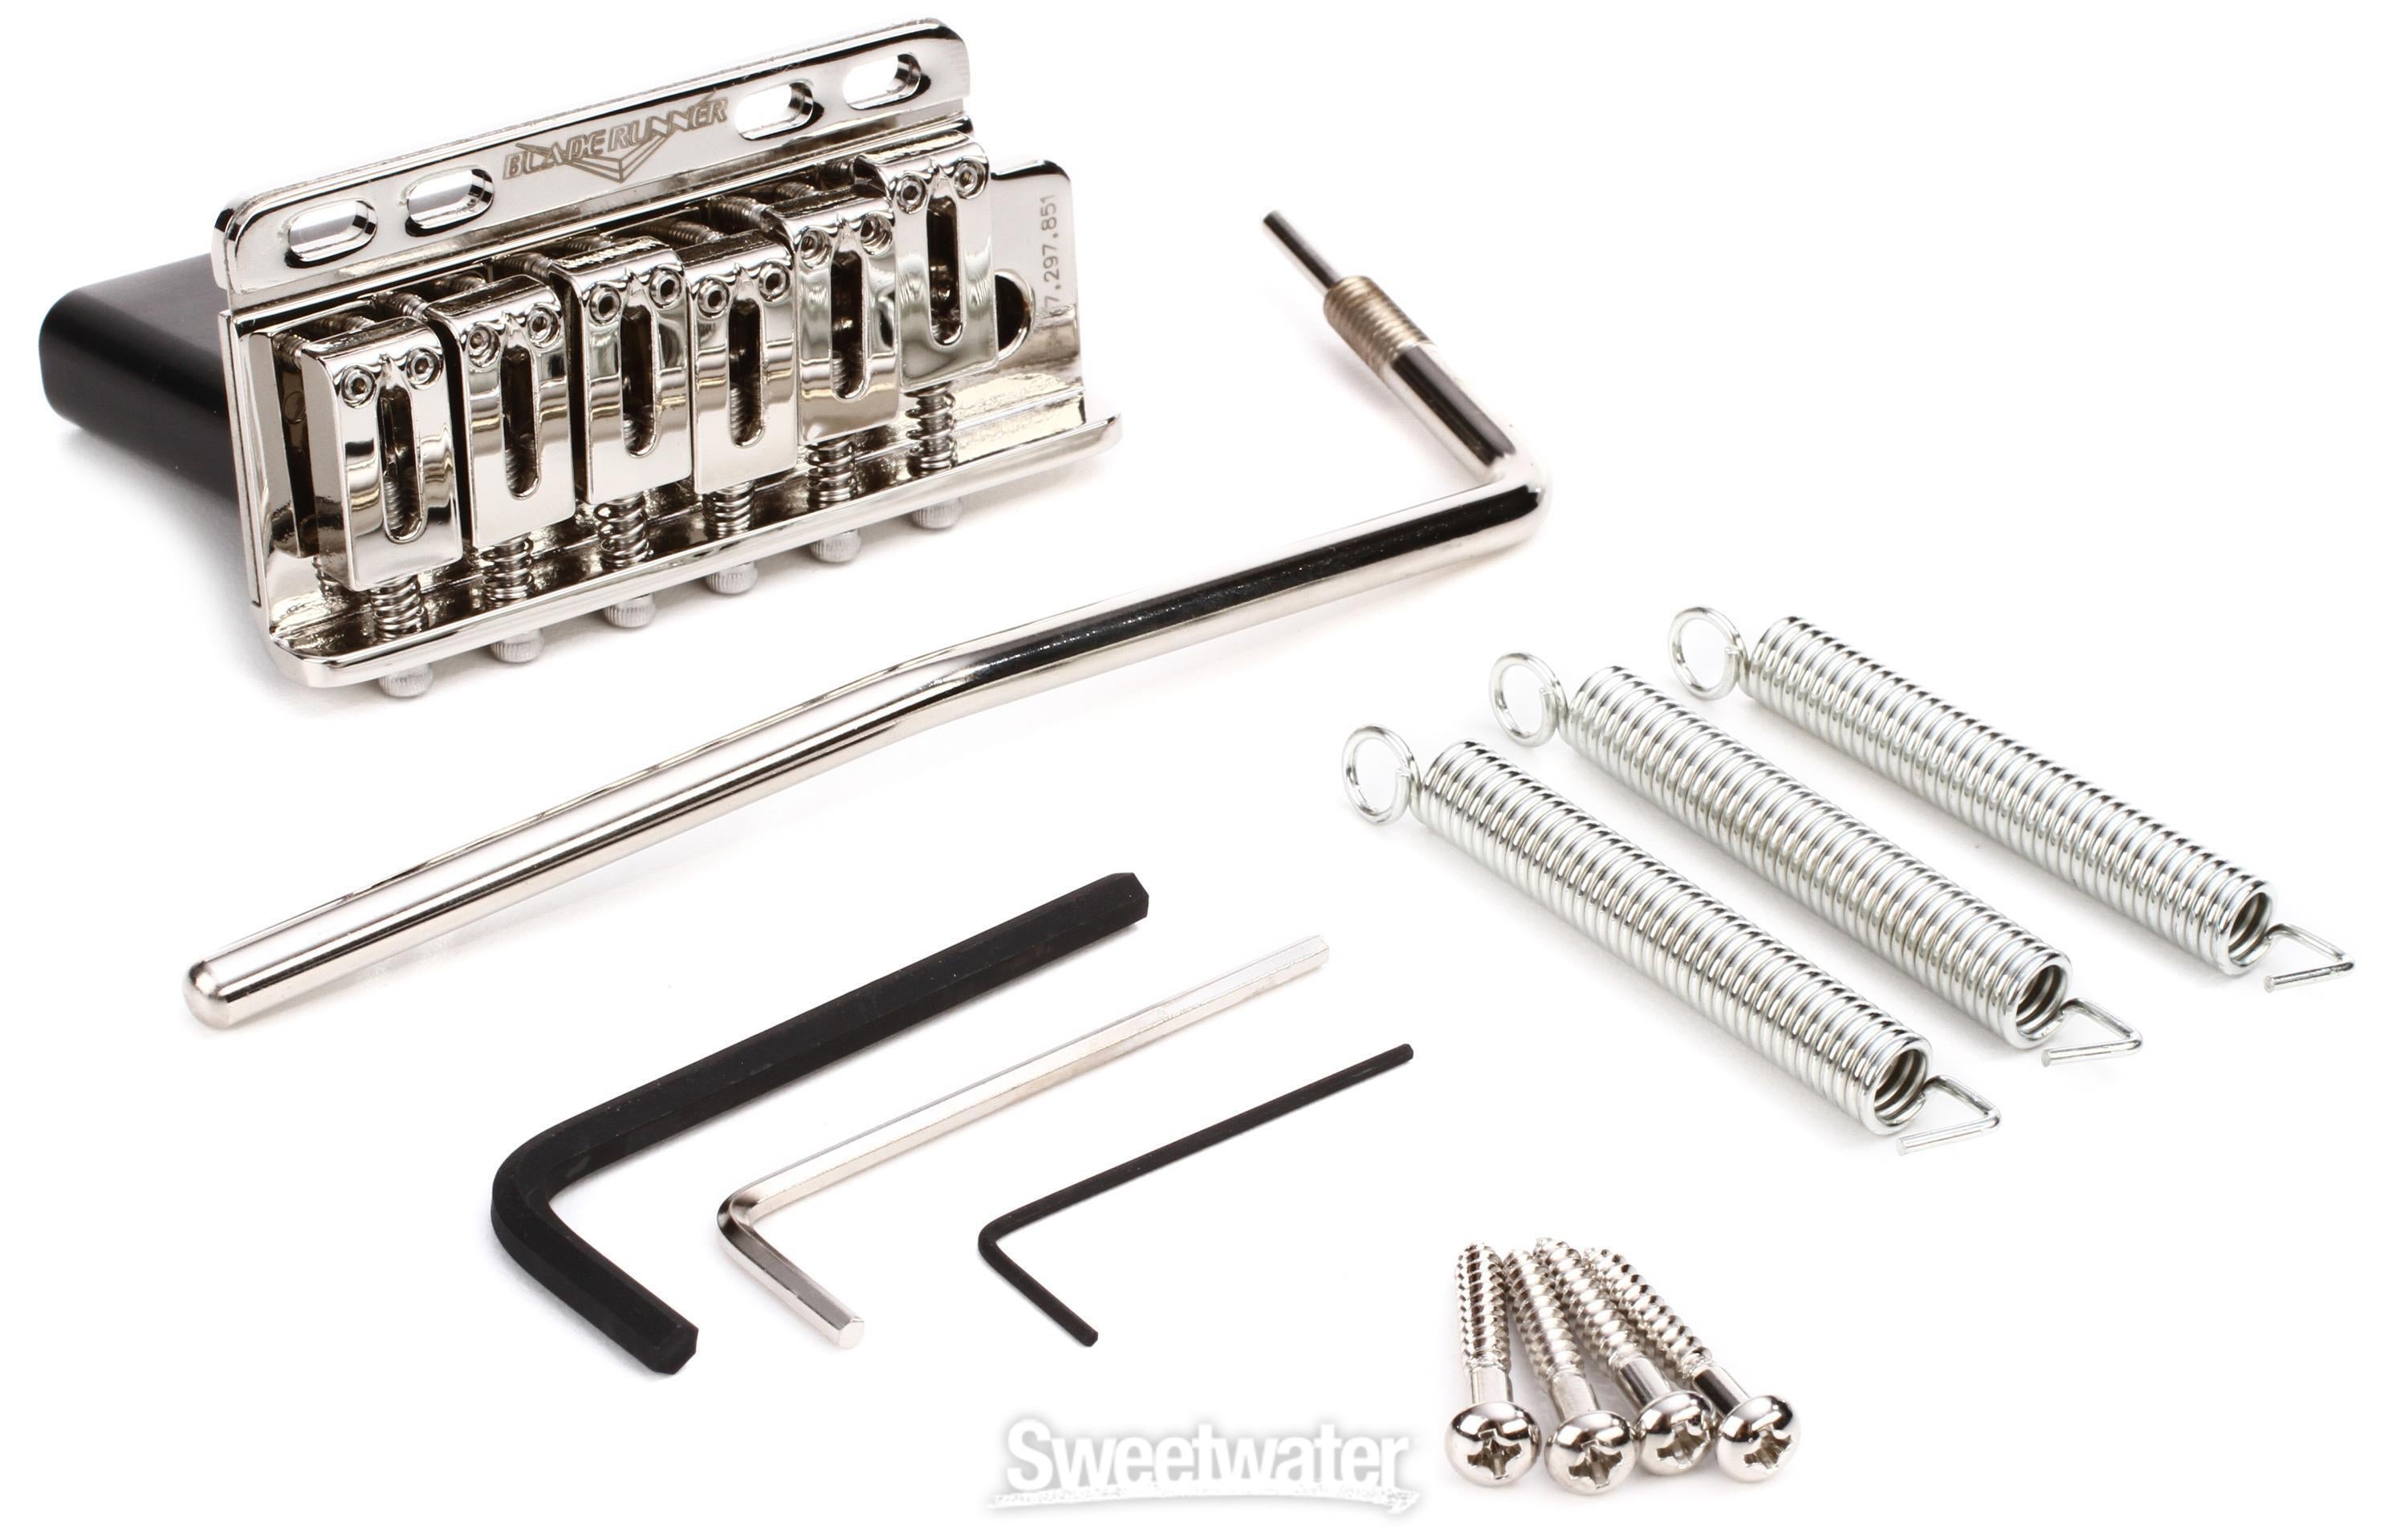 Super-Vee BladeRunner Bridge Kit - 6-screw, Nickel Finish | Sweetwater